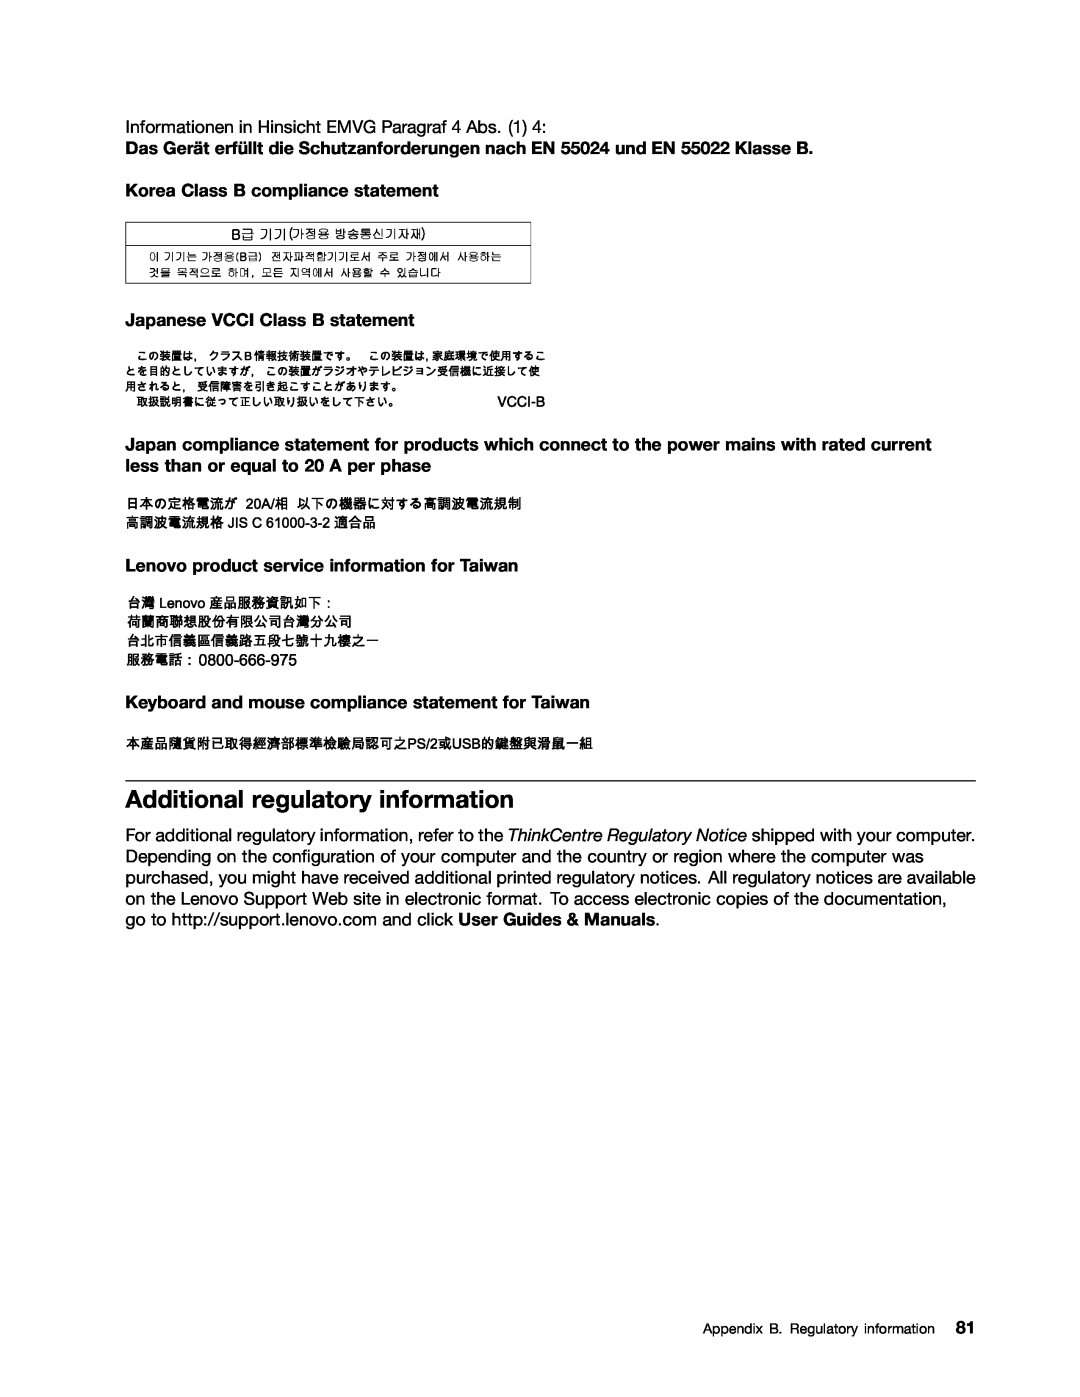 Lenovo 7824, 7782 Additional regulatory information, Korea Class B compliance statement Japanese VCCI Class B statement 